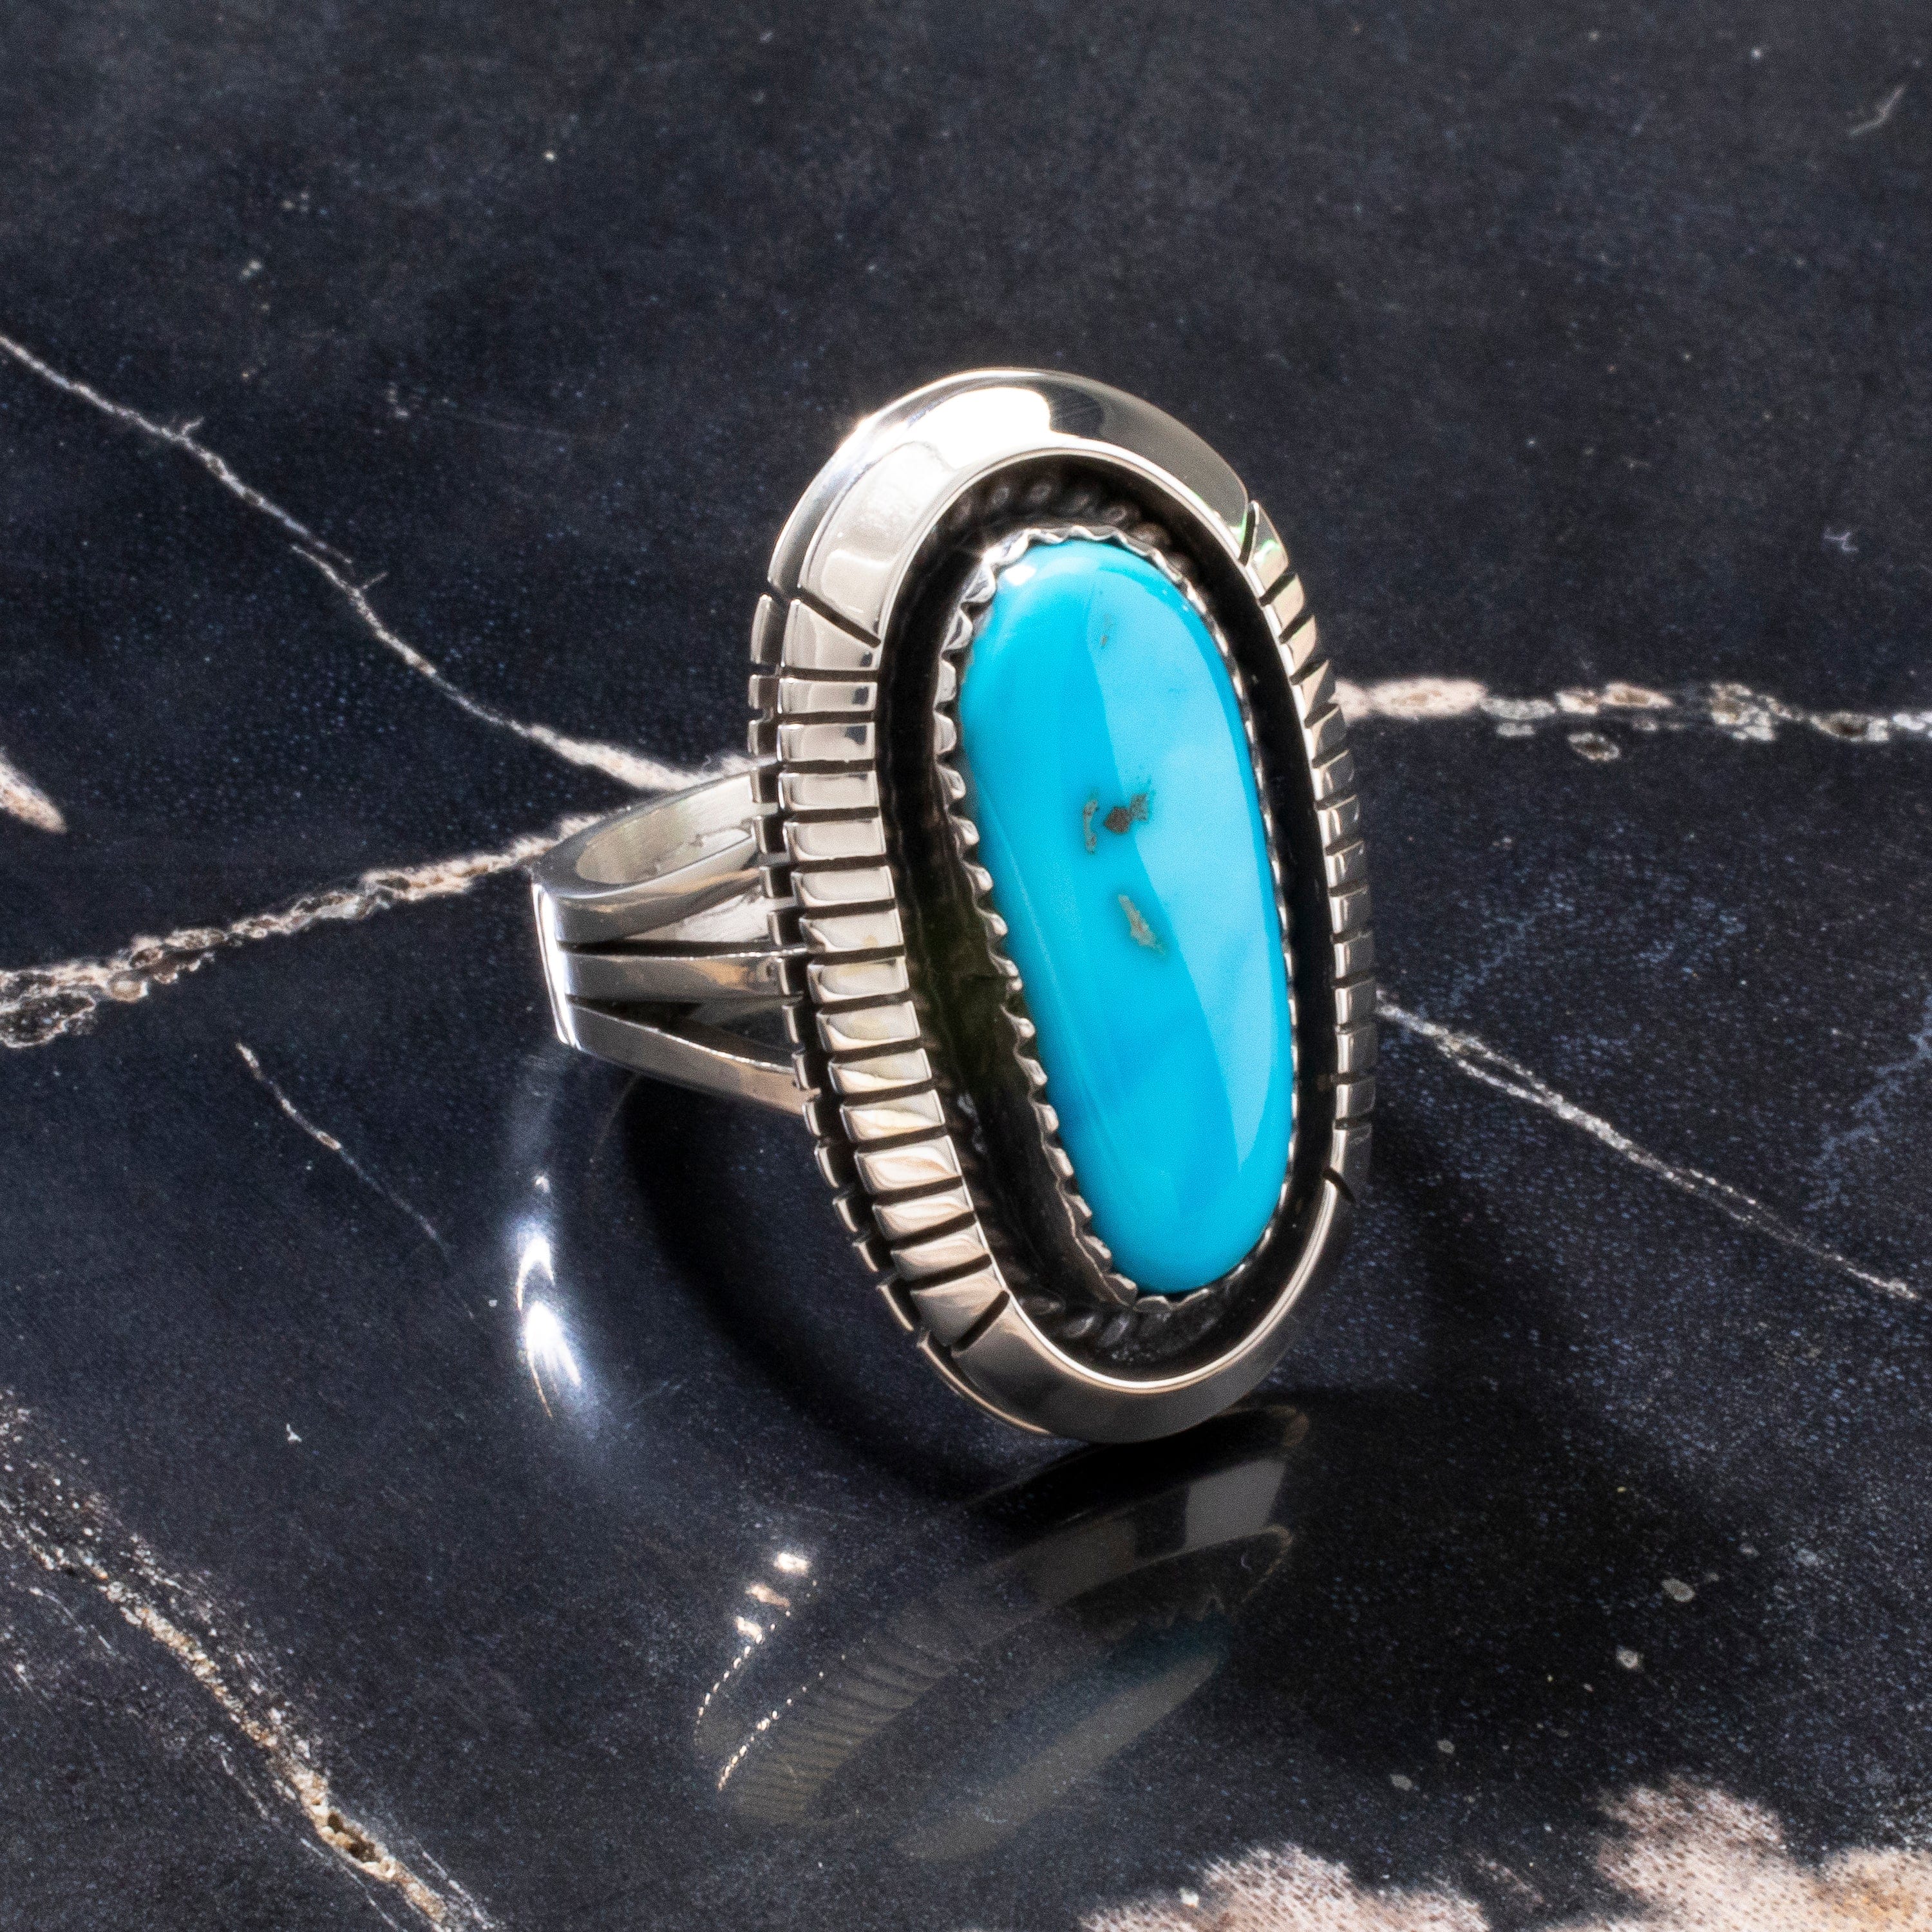 Kalifano Native American Jewelry 7 Joe Piaso Jr. Sleeping Beauty Turquoise Navajo USA Native American Made 925 Sterling Silver Ring NAR700.040.7